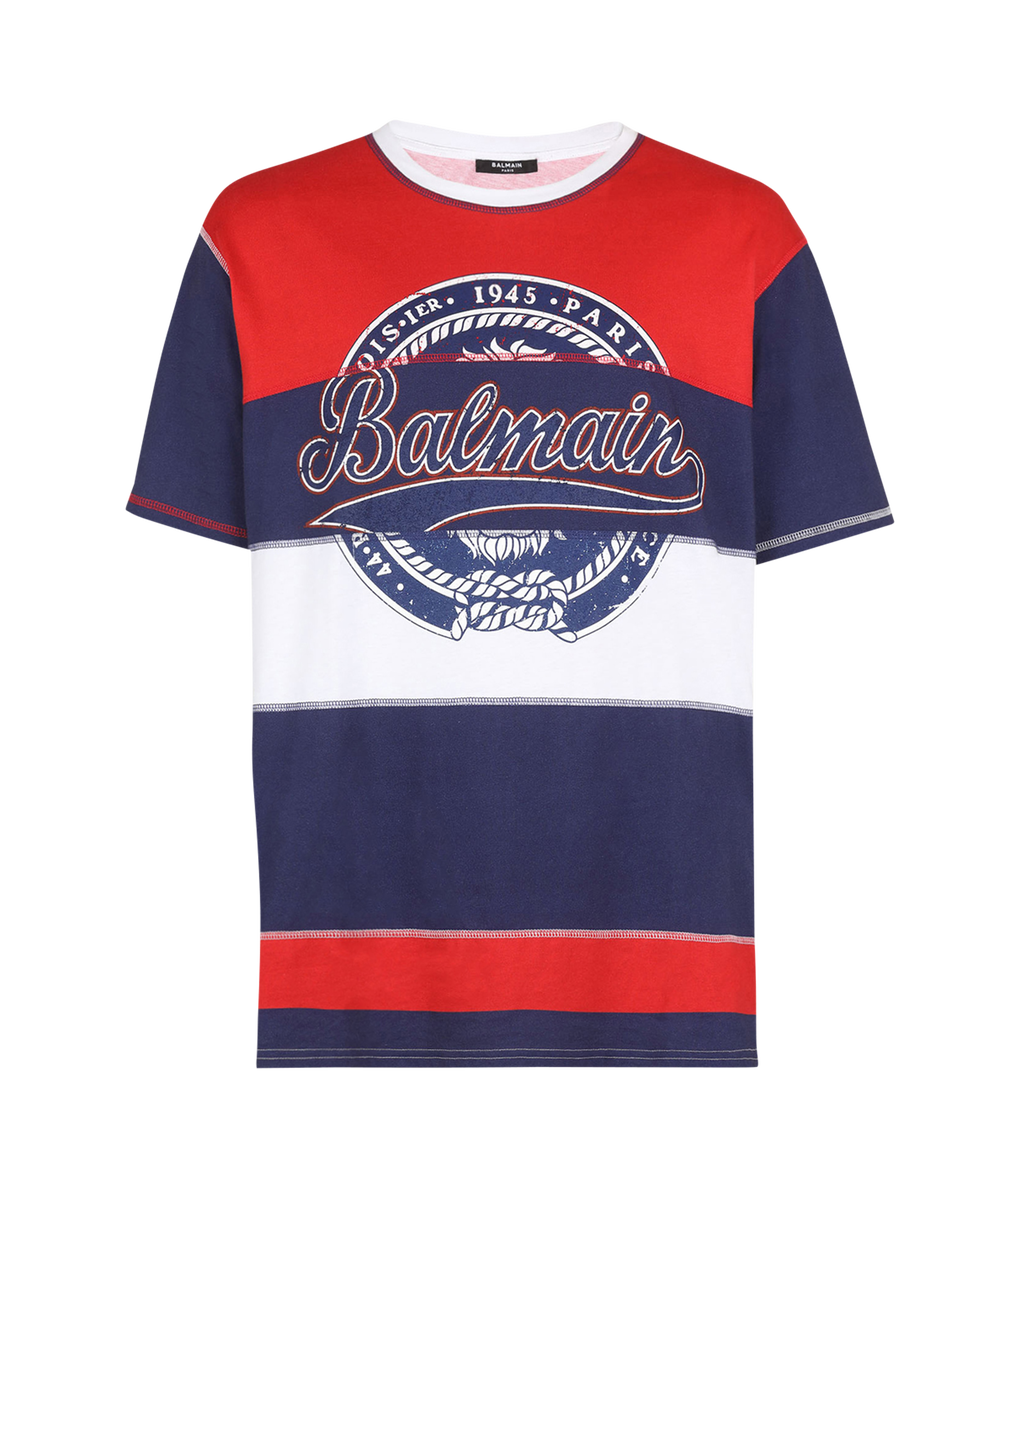 HIGH SUMMER CAPSULE - T-shirt en coton mprimé logo Balmain Paris, multicolore, hi-res